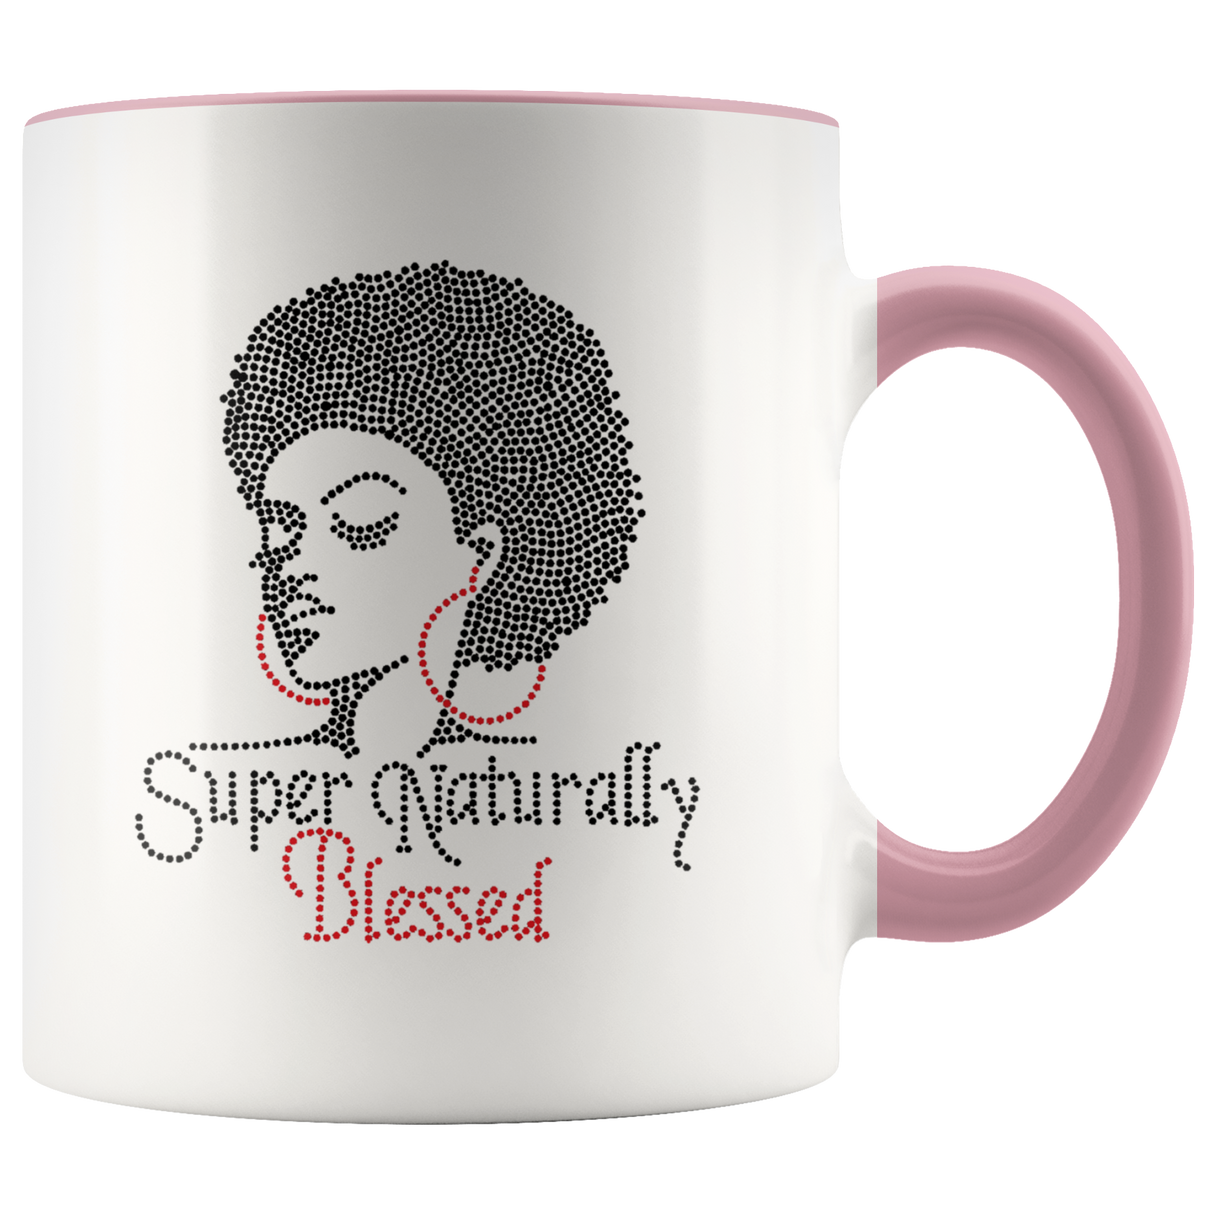 Mug Super Naturally Blessed Ceramic Mug - Pink | Shop Sassy Chick